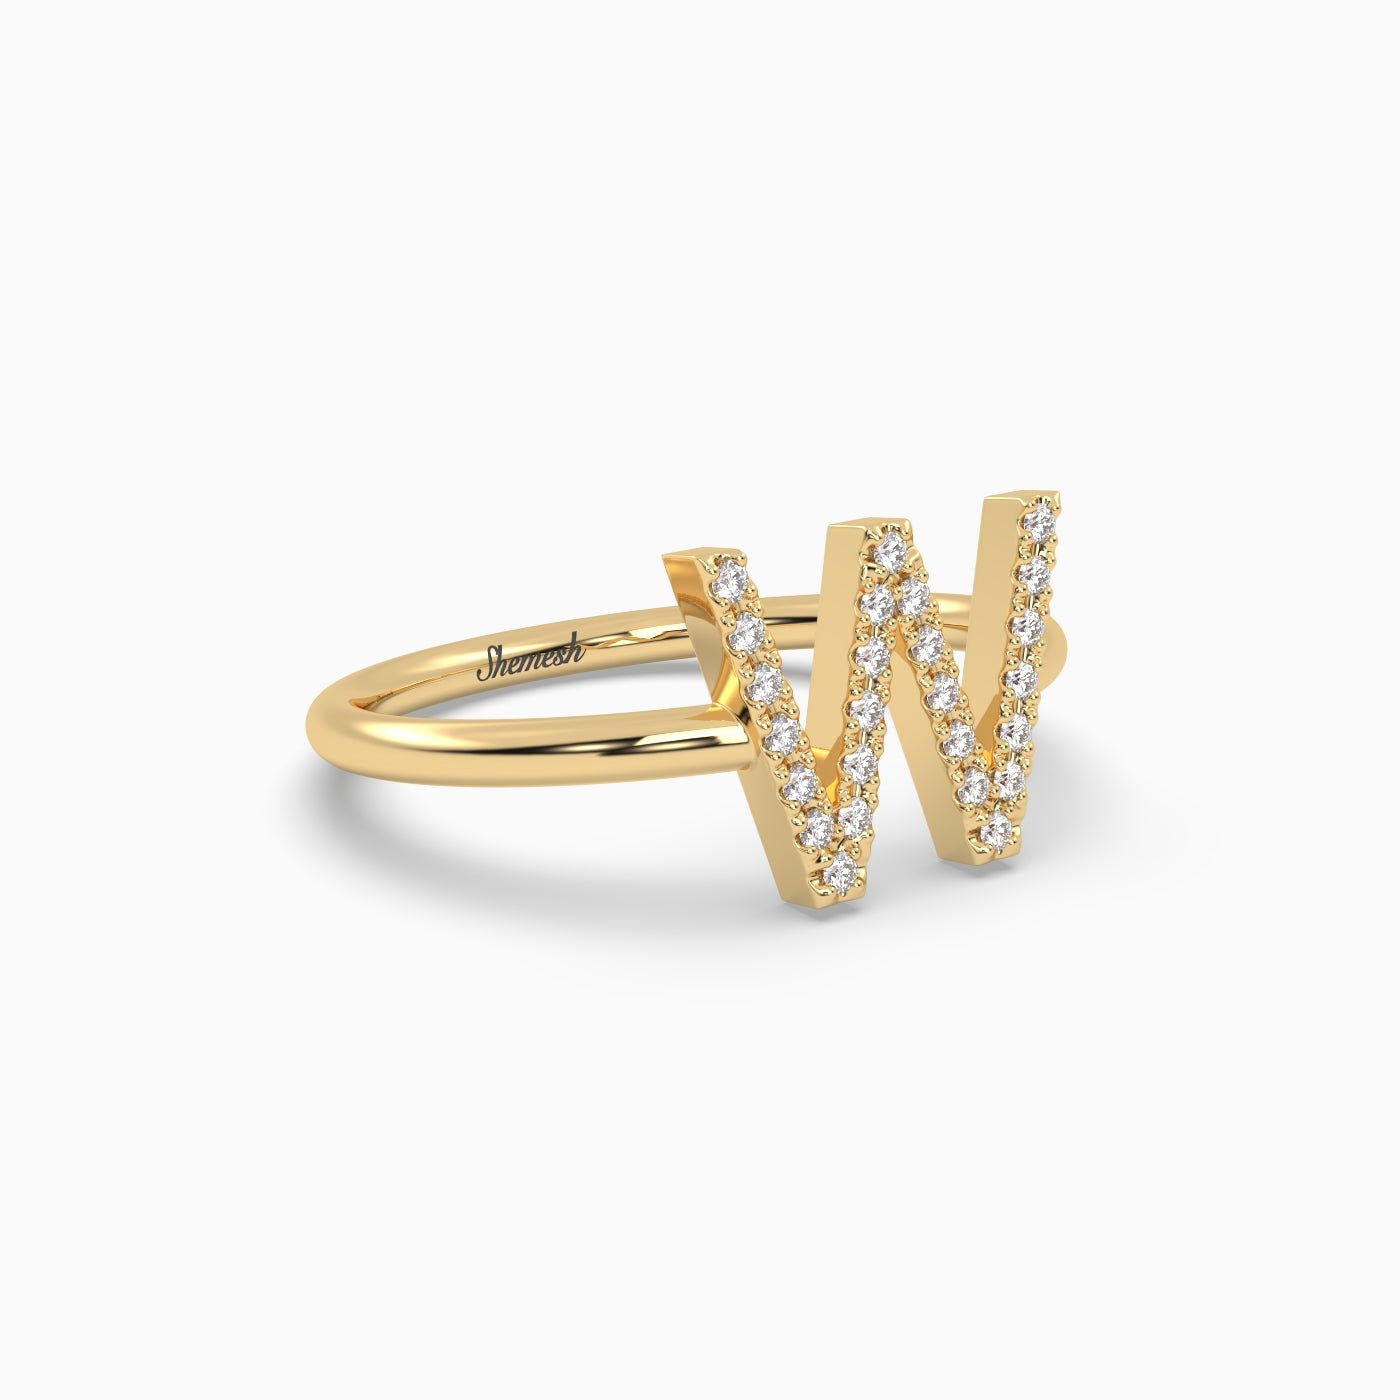 18K Gold "W" Initial Ring - shemesh_diamonds